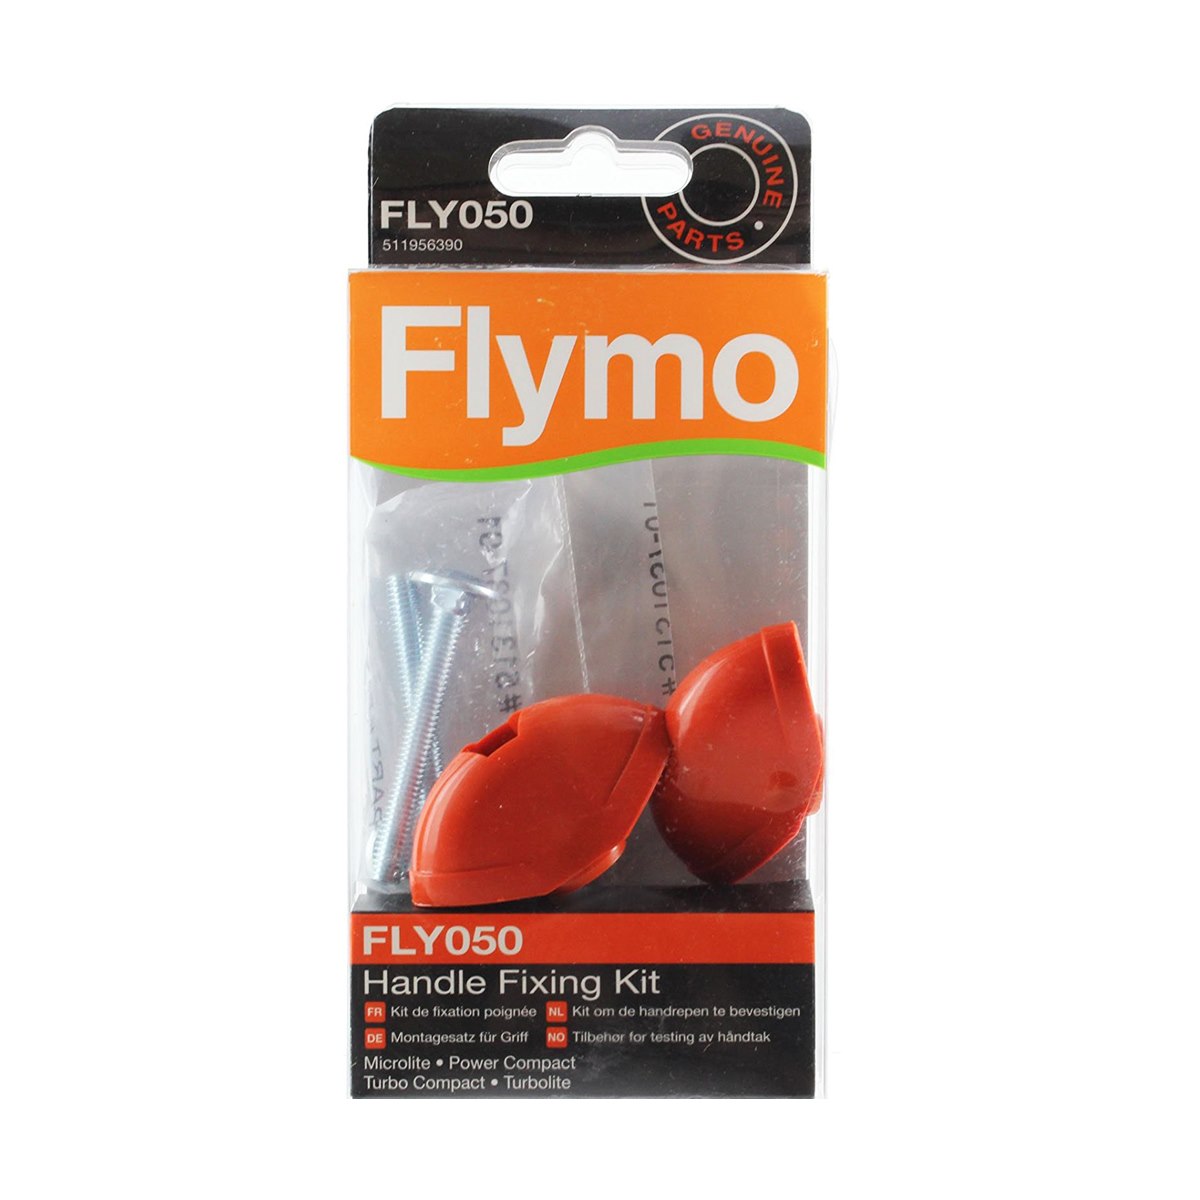 FLY050 Genuine Flymo Handle Fixing Kit